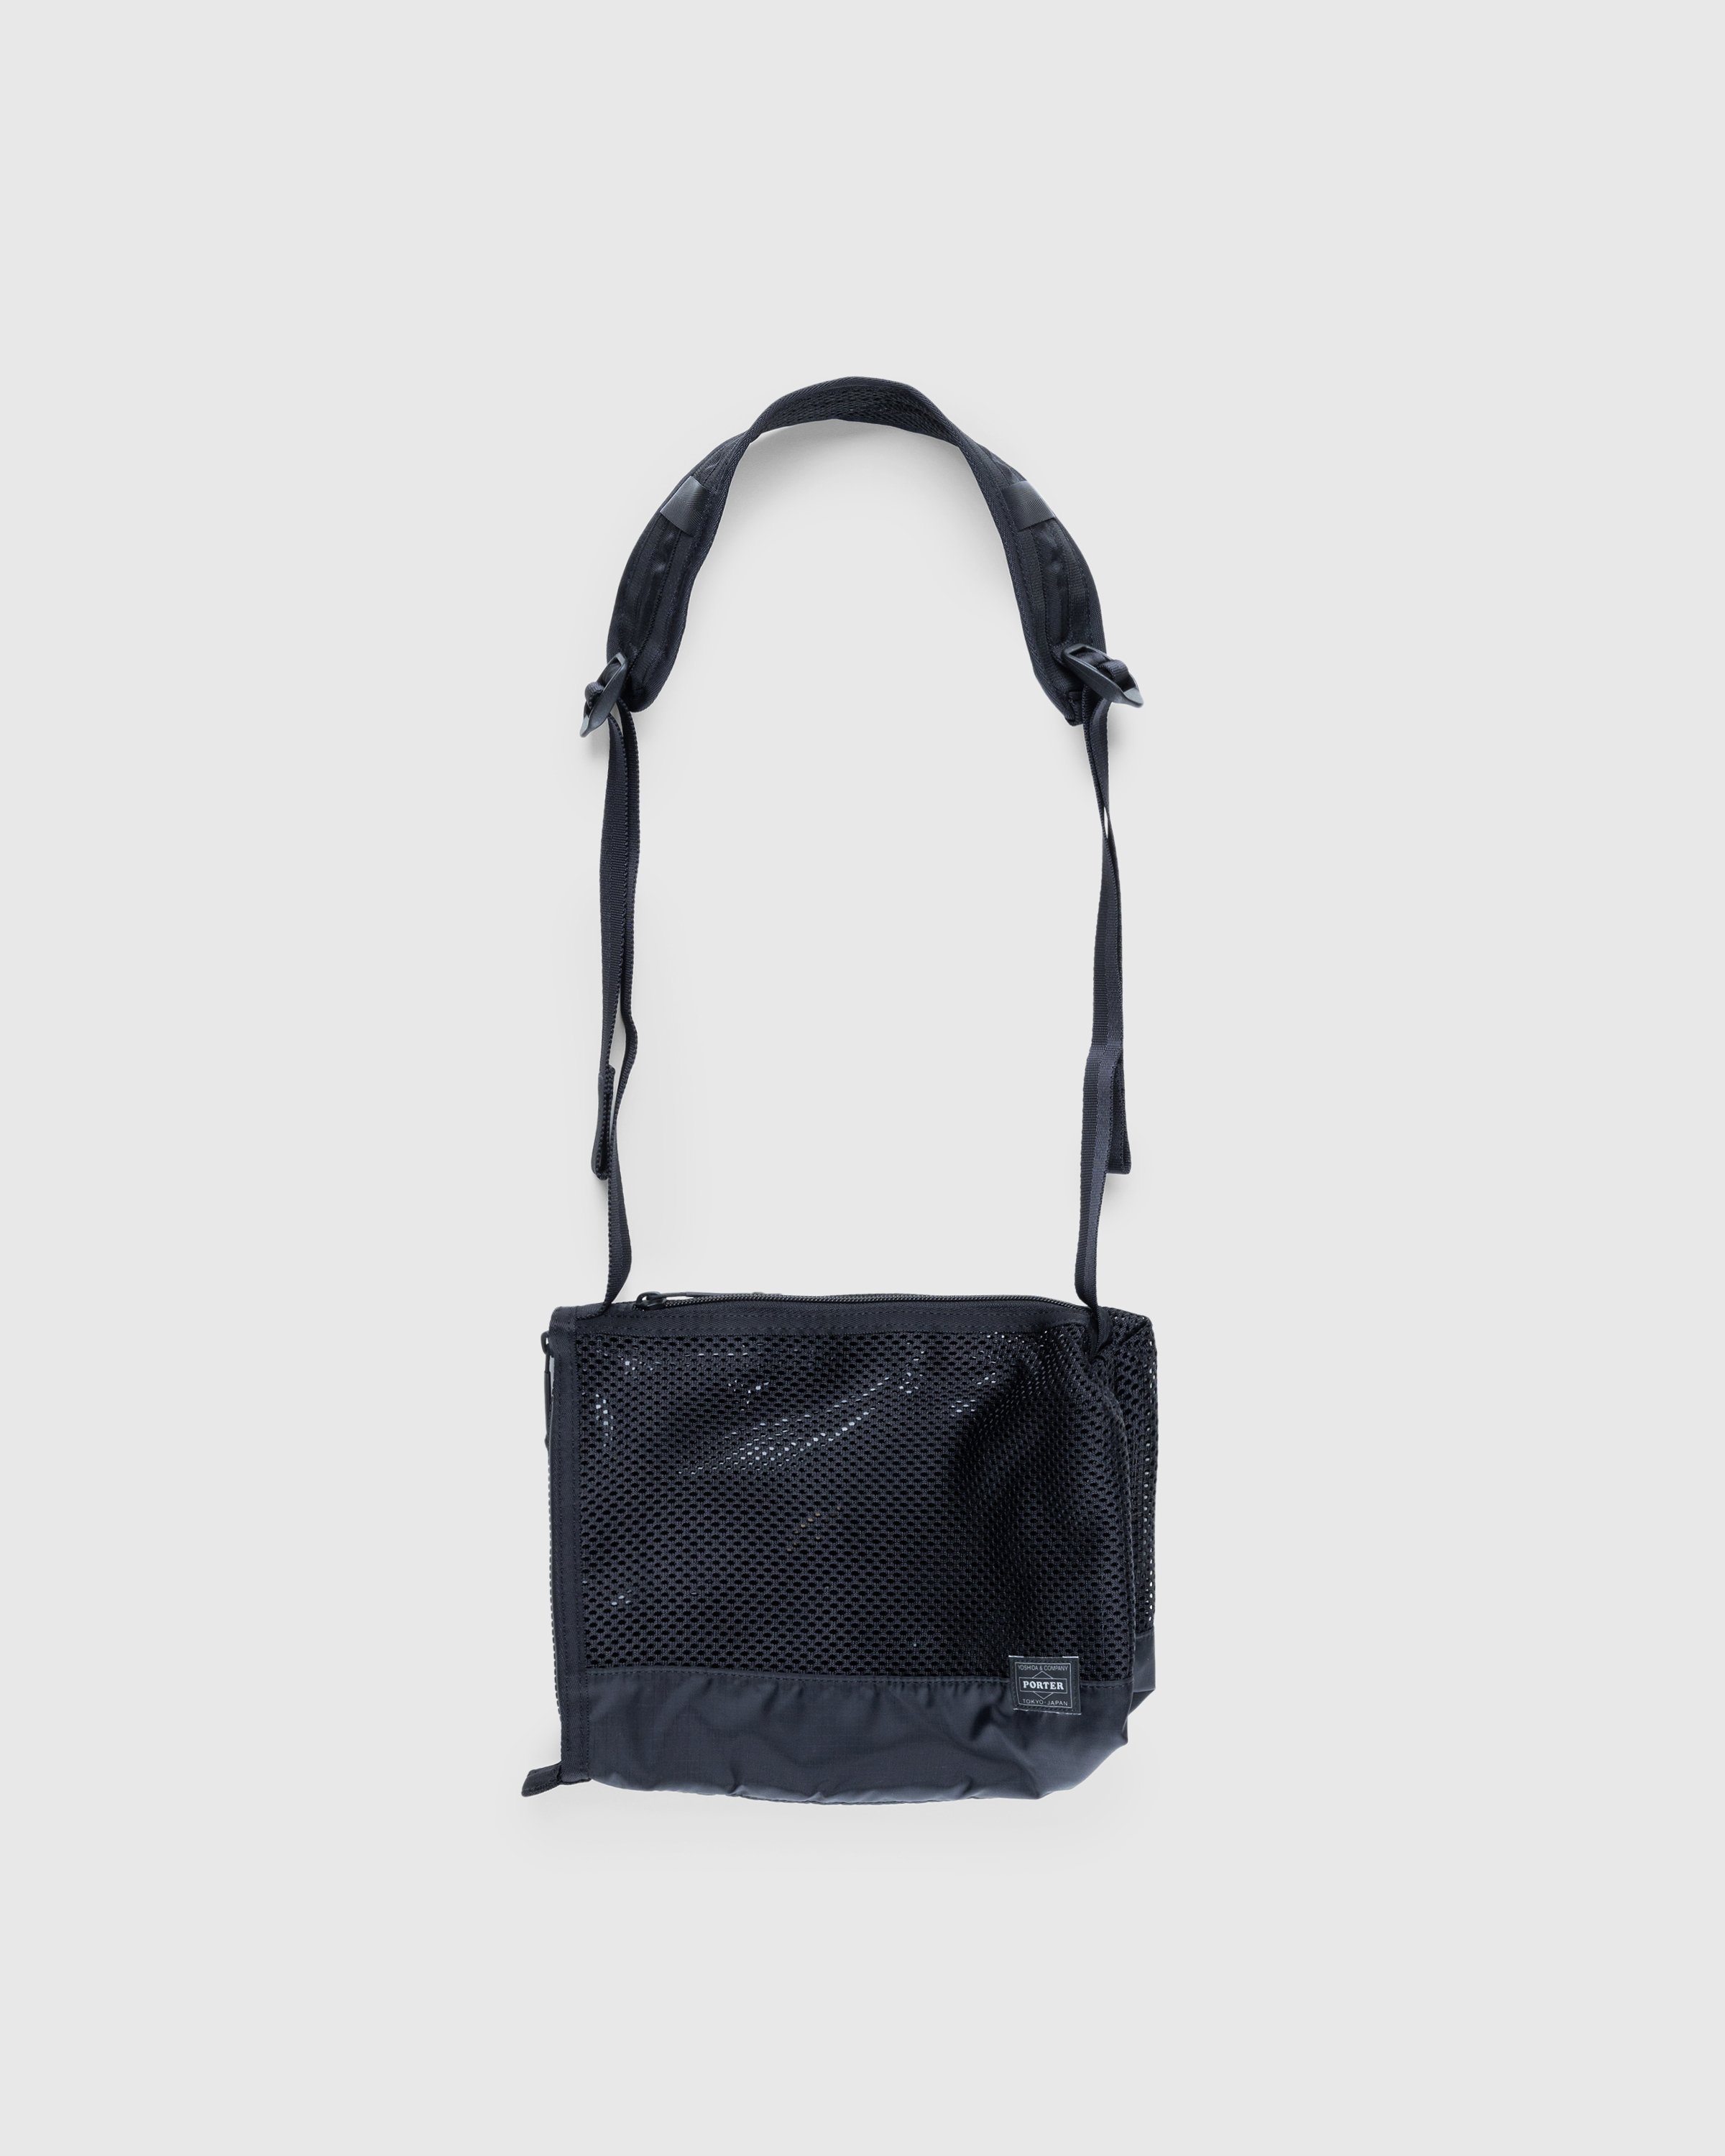 Porter-Yoshida & Co. - Screen Front Side Bag Black - Accessories - Black - Image 2